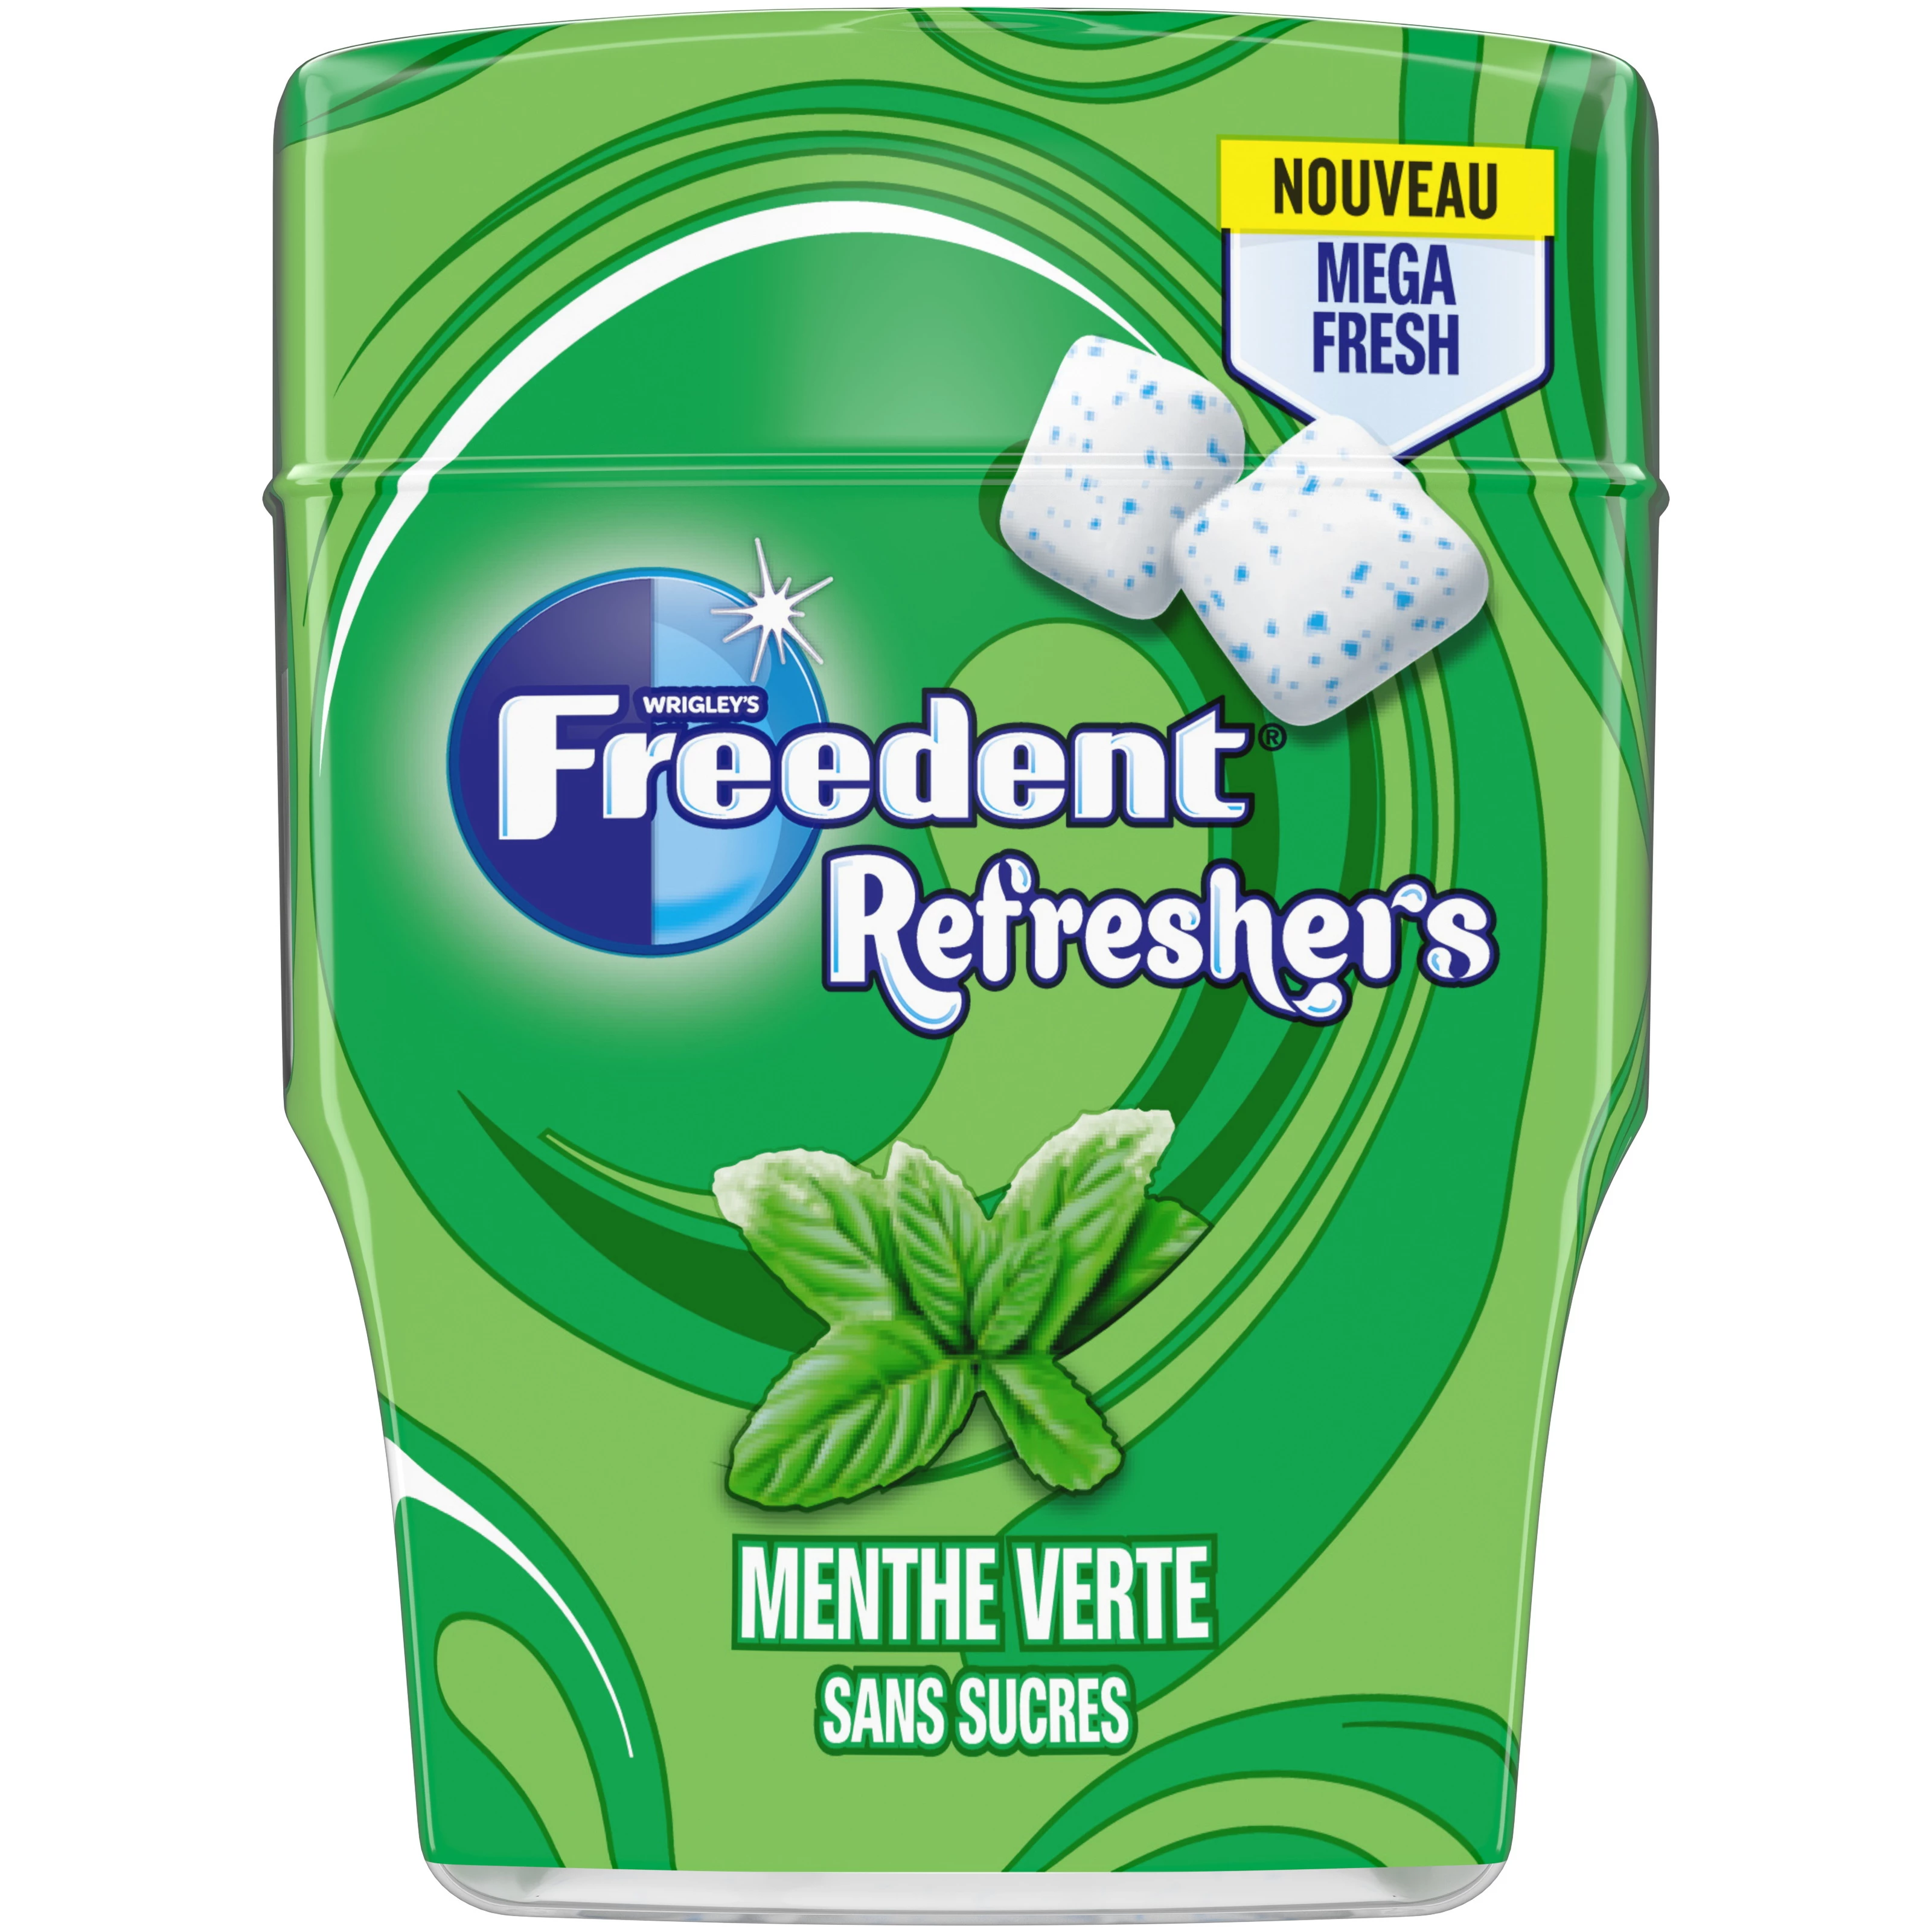 Refresher Spearmint Dragées; 67g - FREEDENT